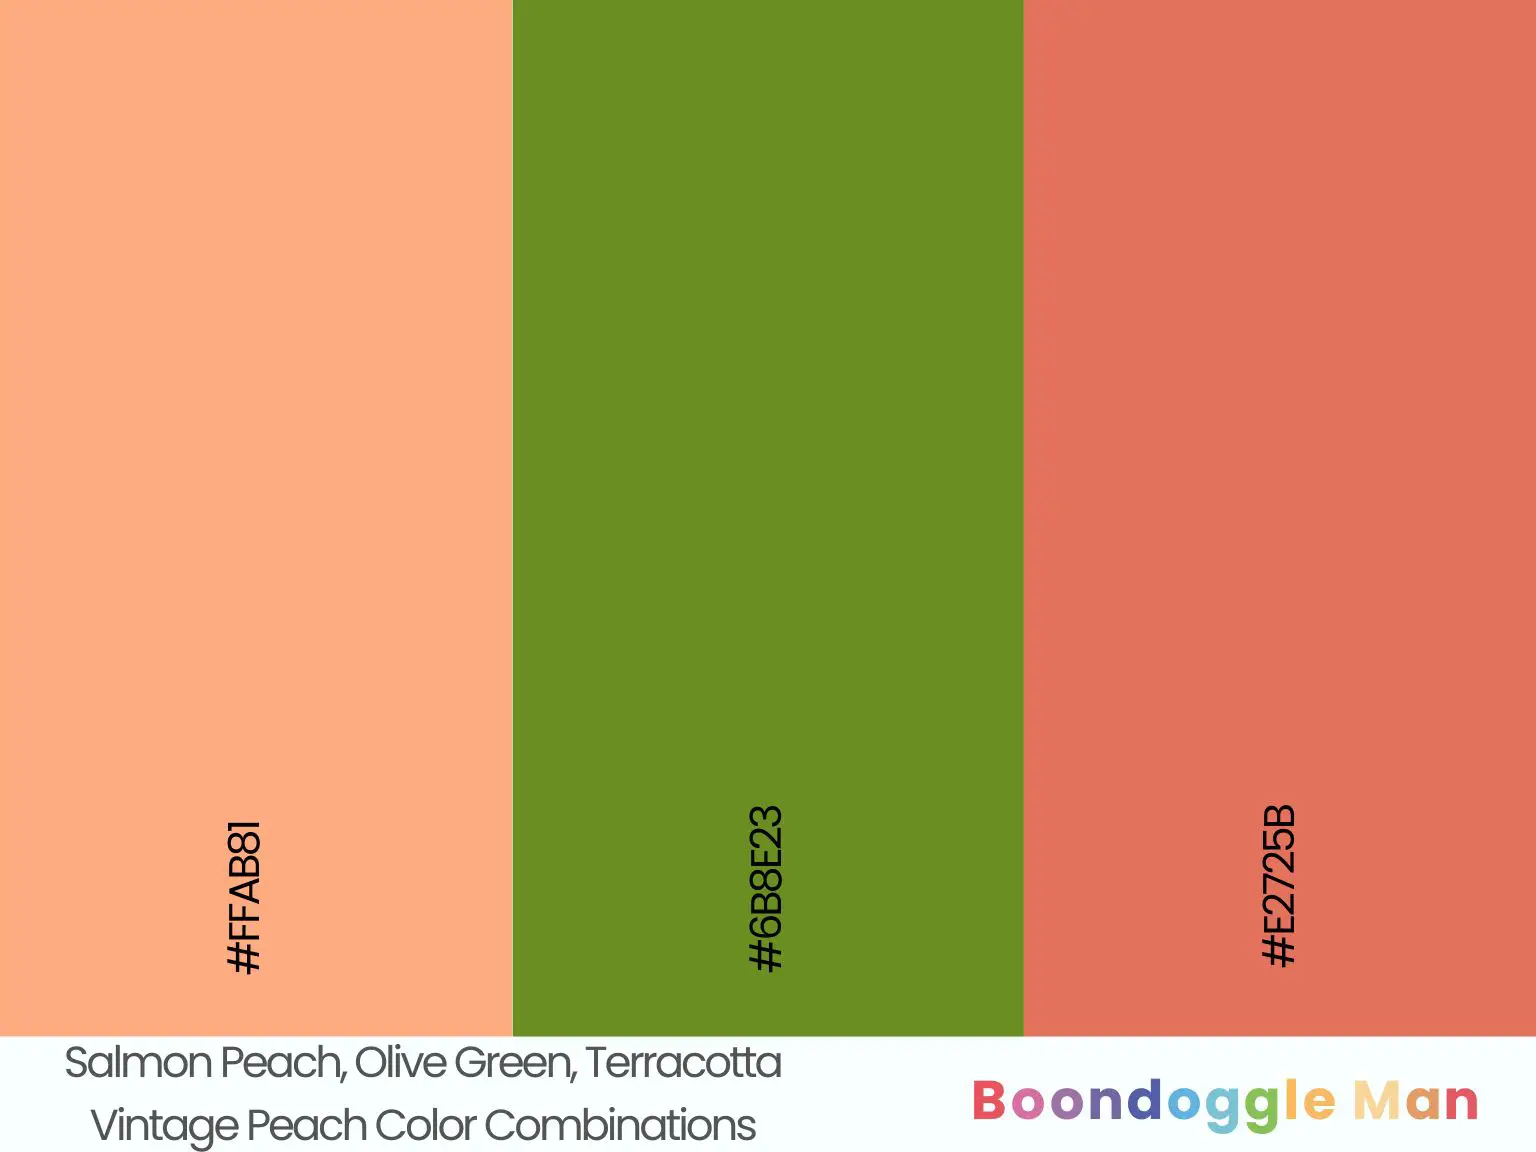 Salmon Peach, Olive Green, Terracotta